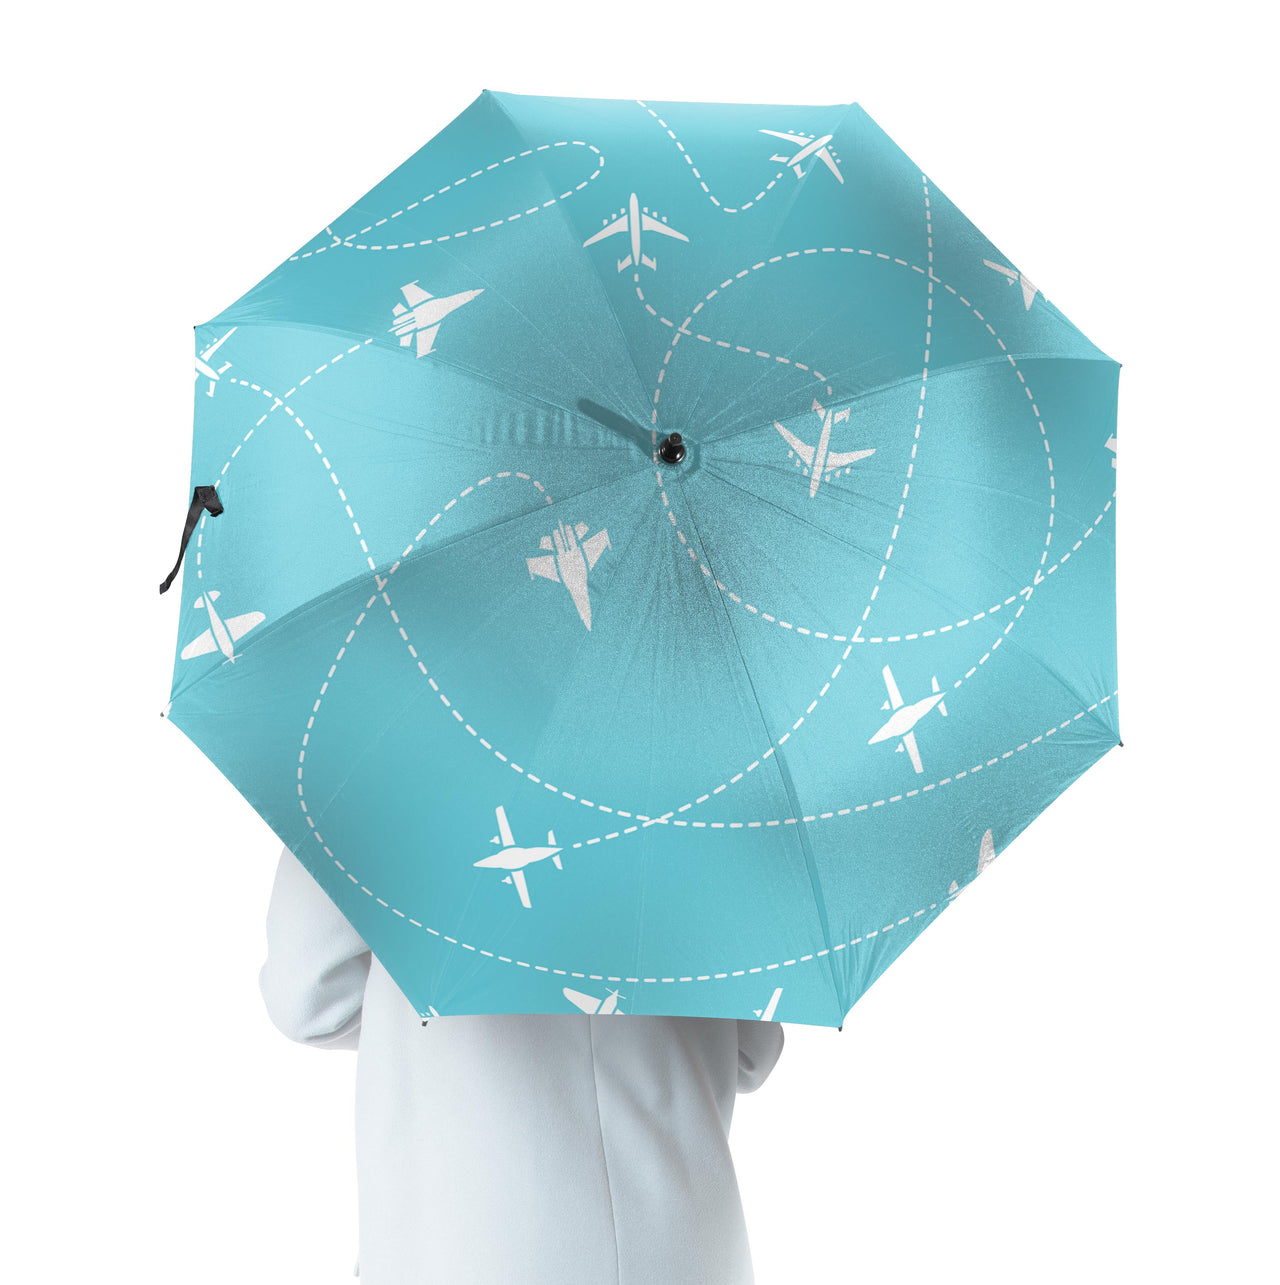 Travel The World By Plane Designed Umbrella